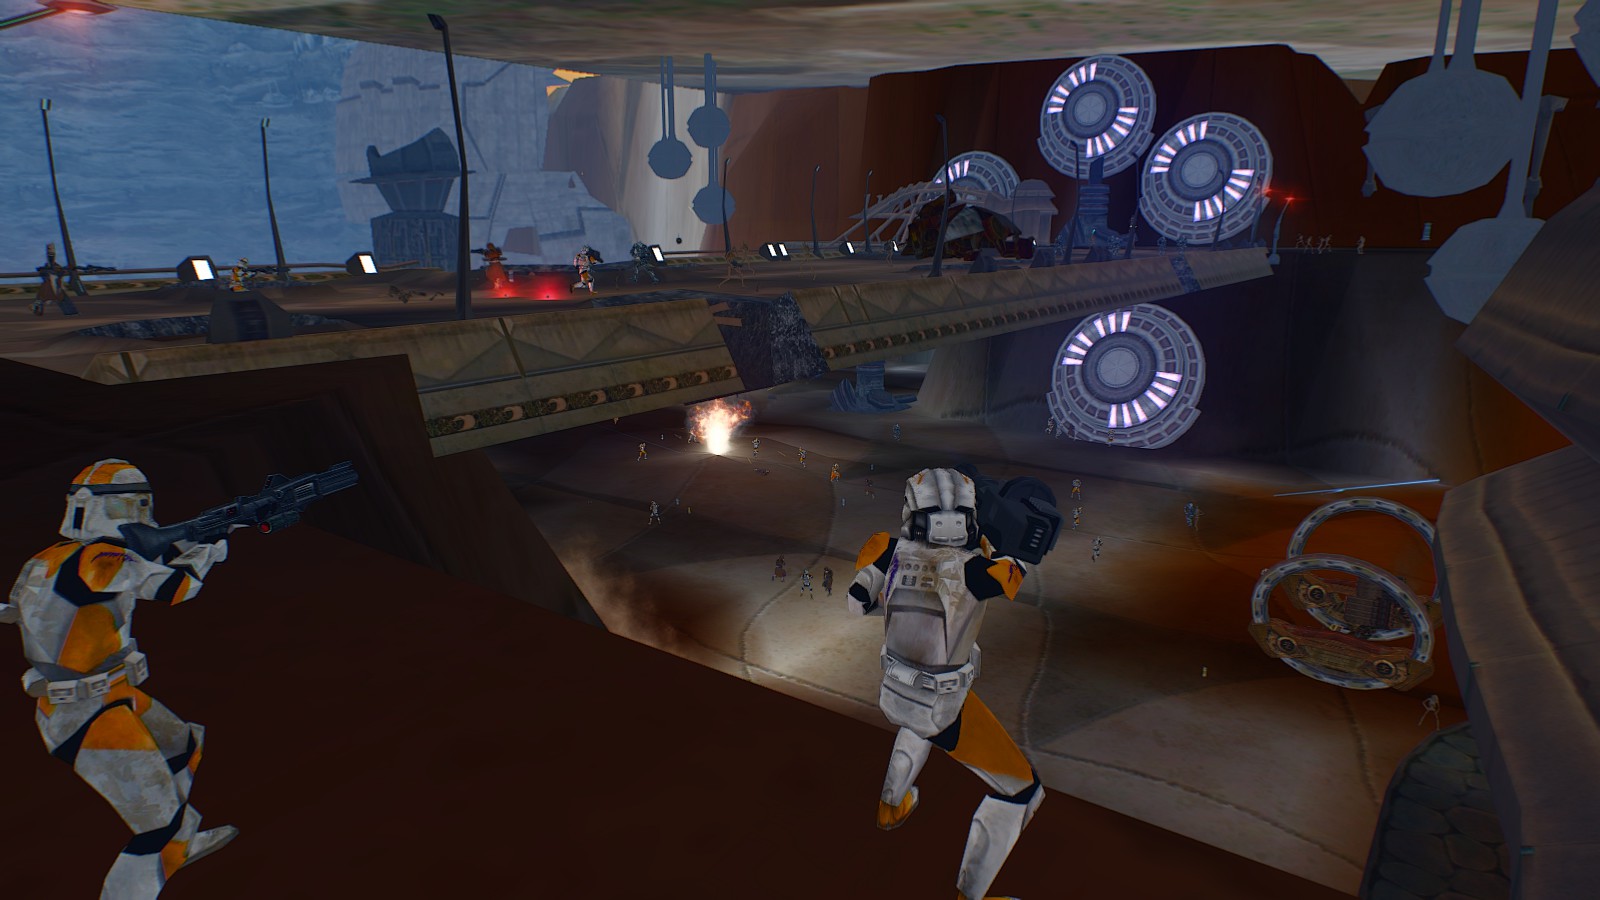 Star Wars Battlefront 2 Gameplay 4 Utapau - Underground Ambush 